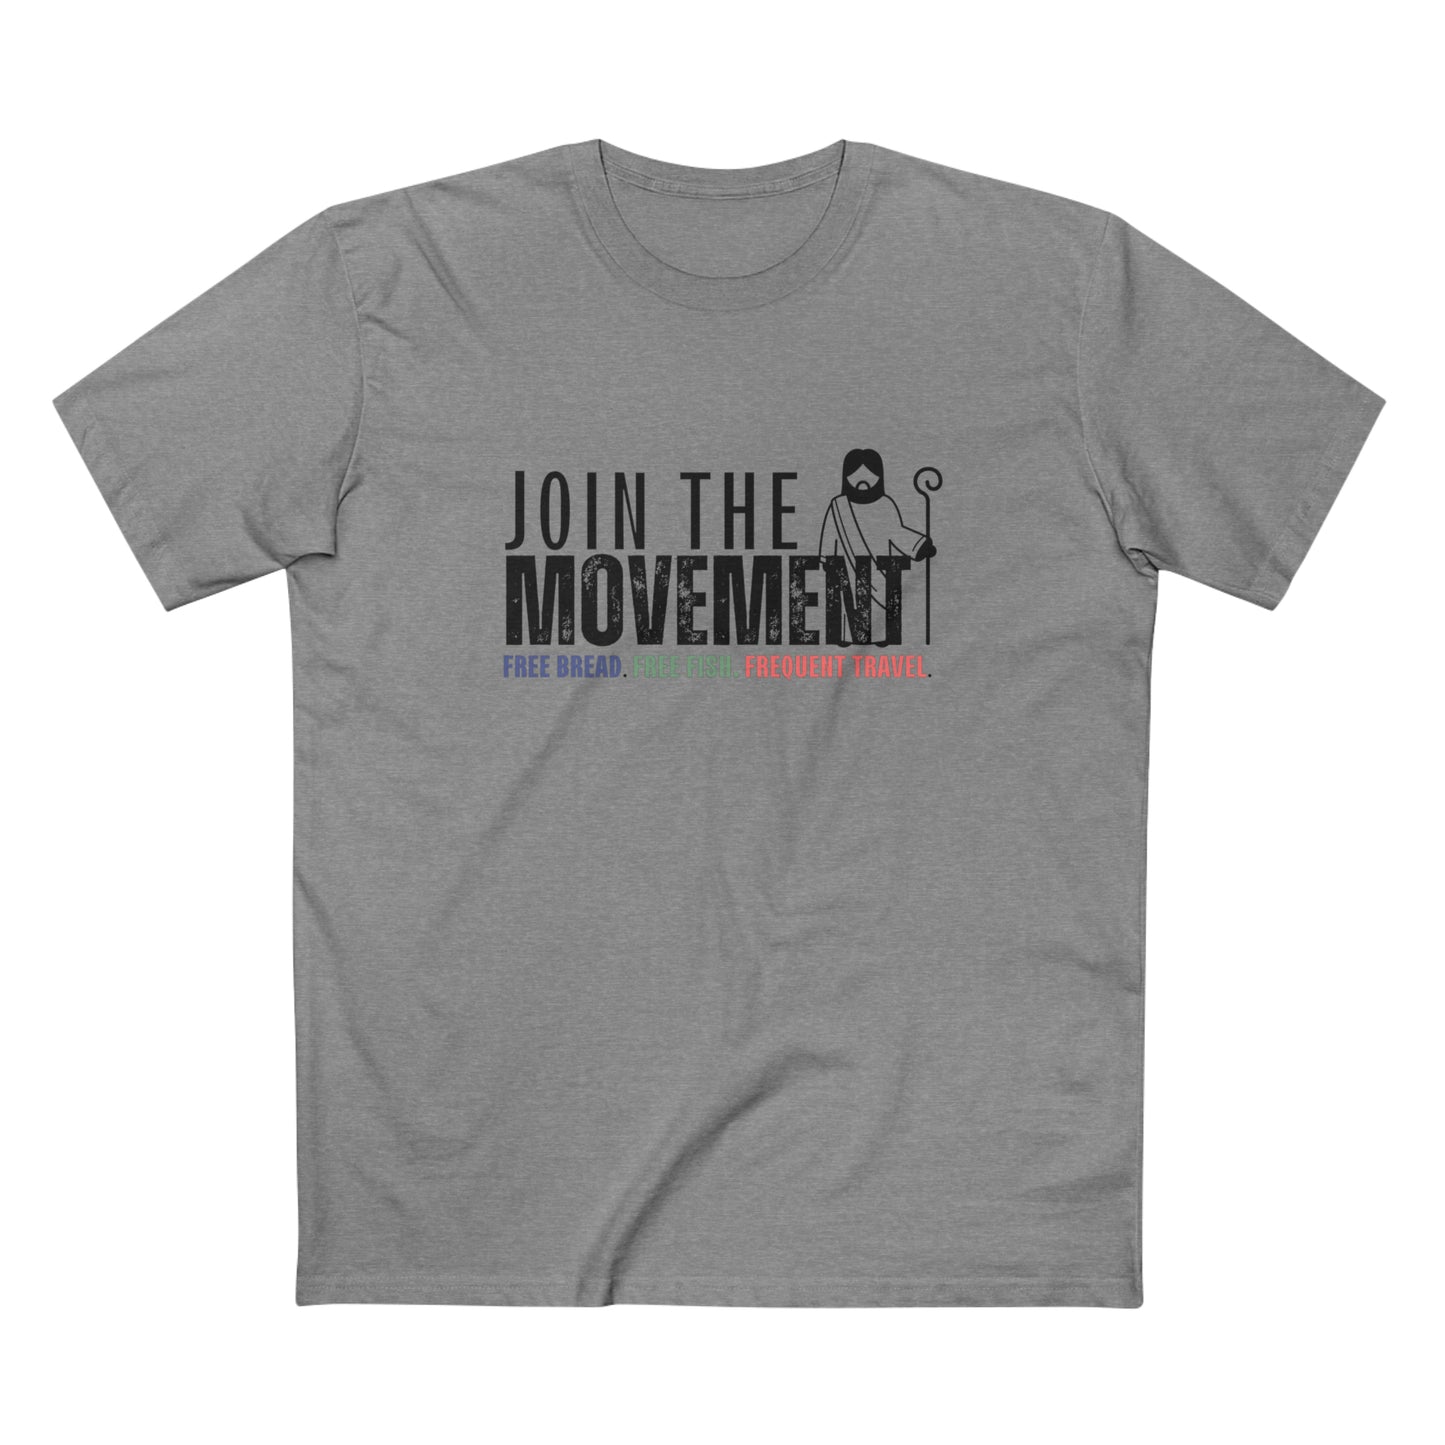 Join the Movement, Christian T-shirt for Men